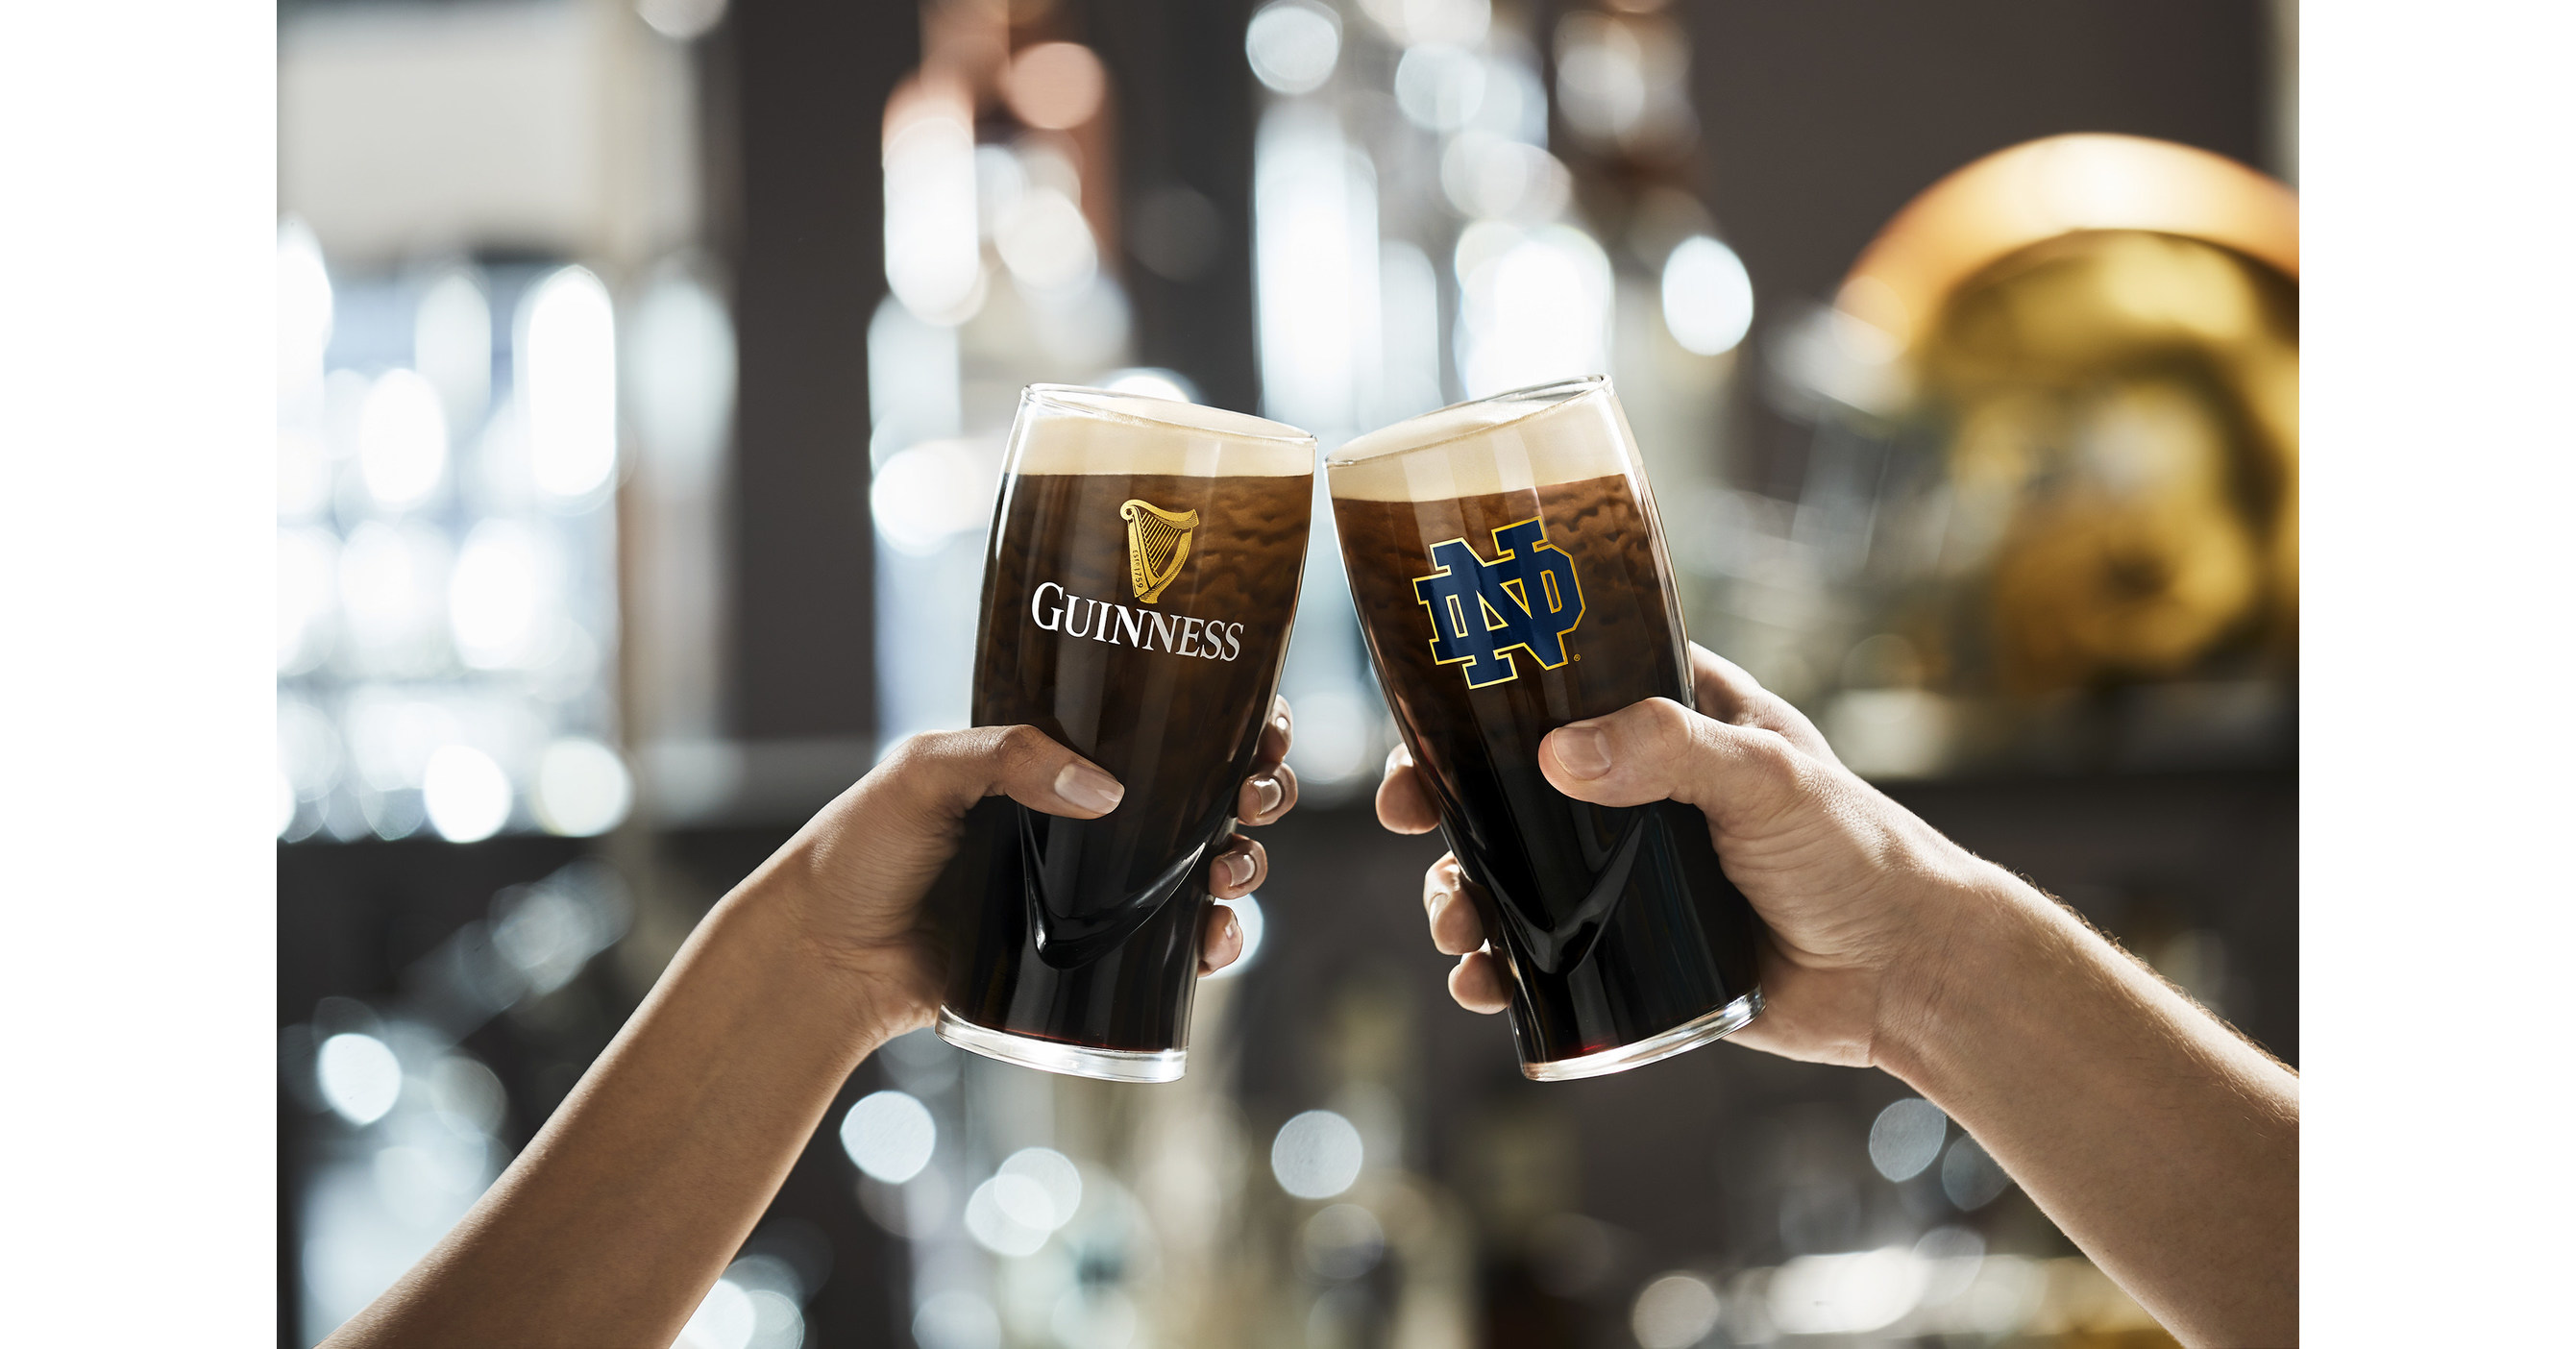 Guinness Notre Dame Pint Glass